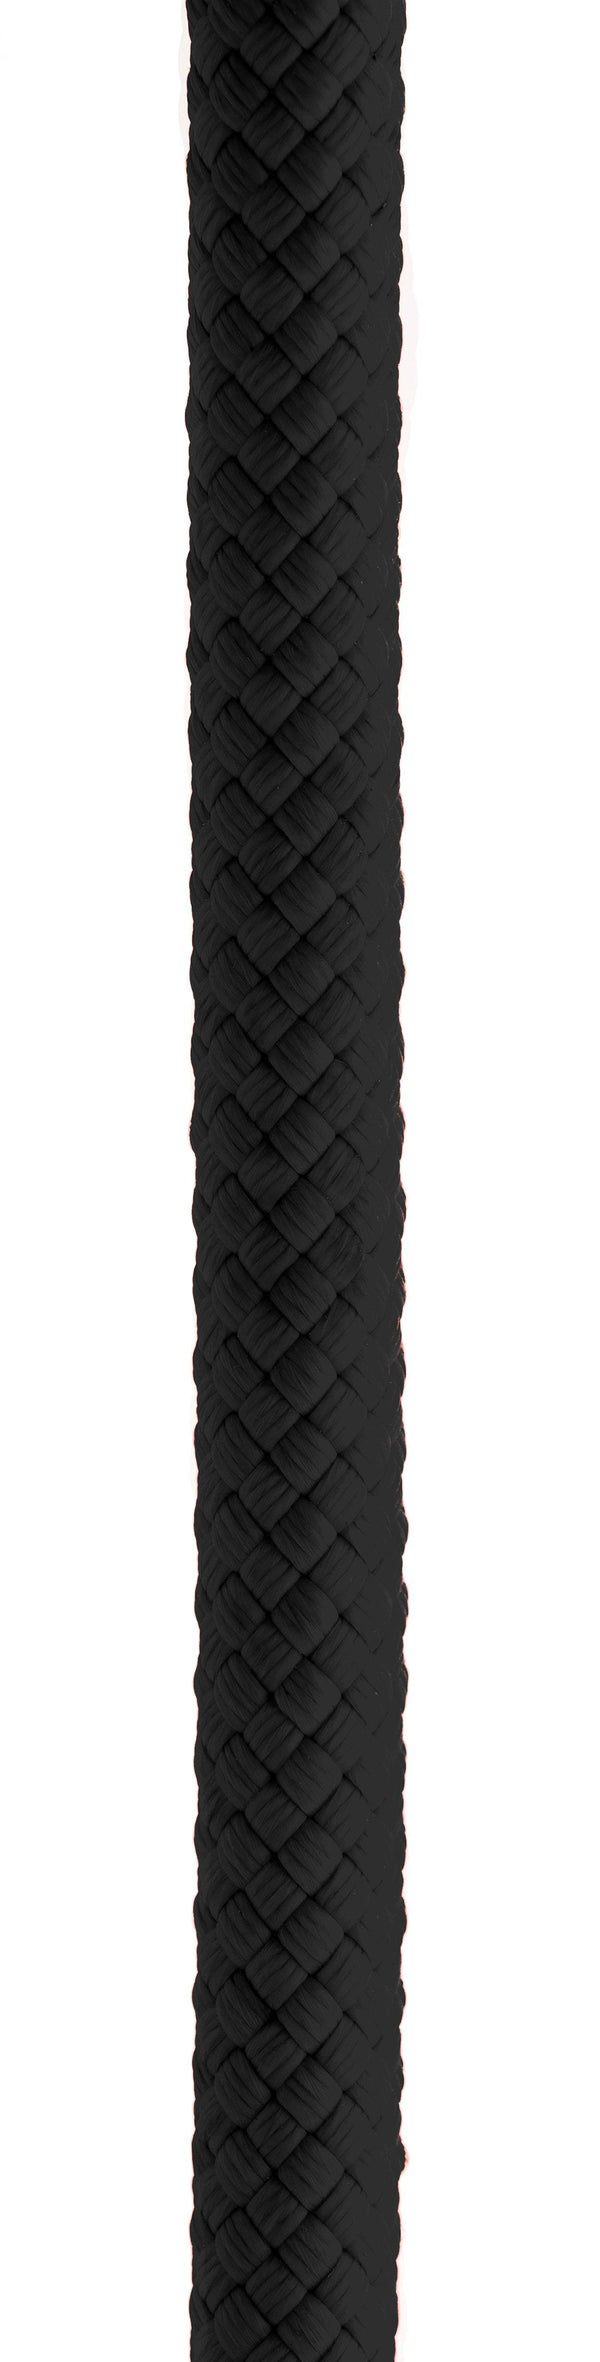 DMM Worksafe Rope - Black 11mm - Skyland Equipment Ltd